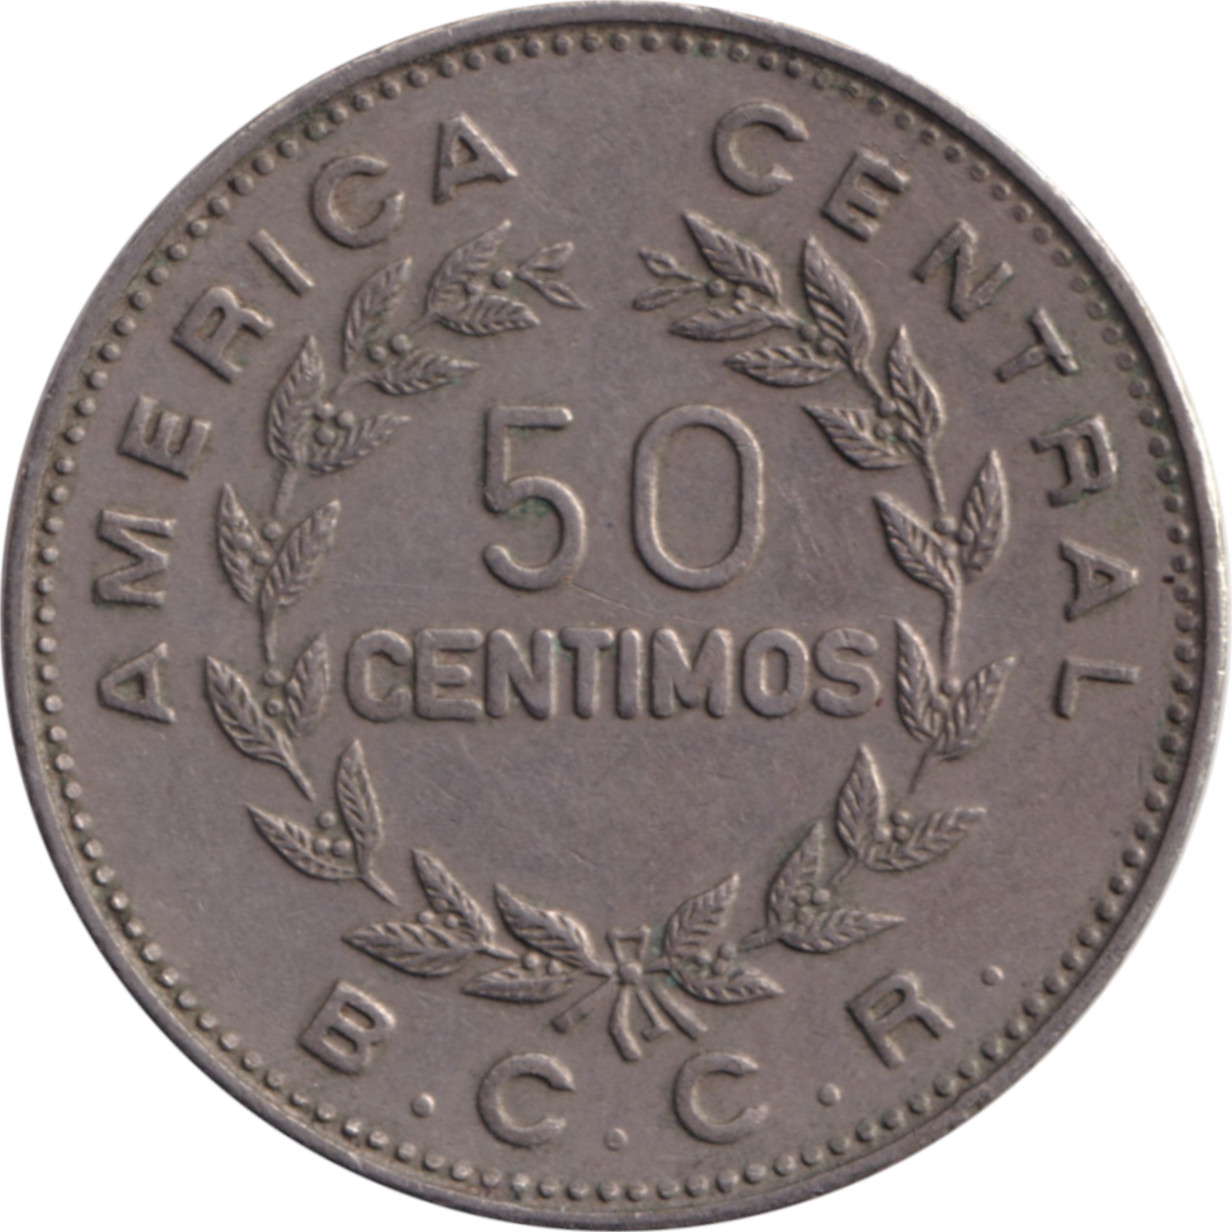 50 centimos - Armoiries - Lourde